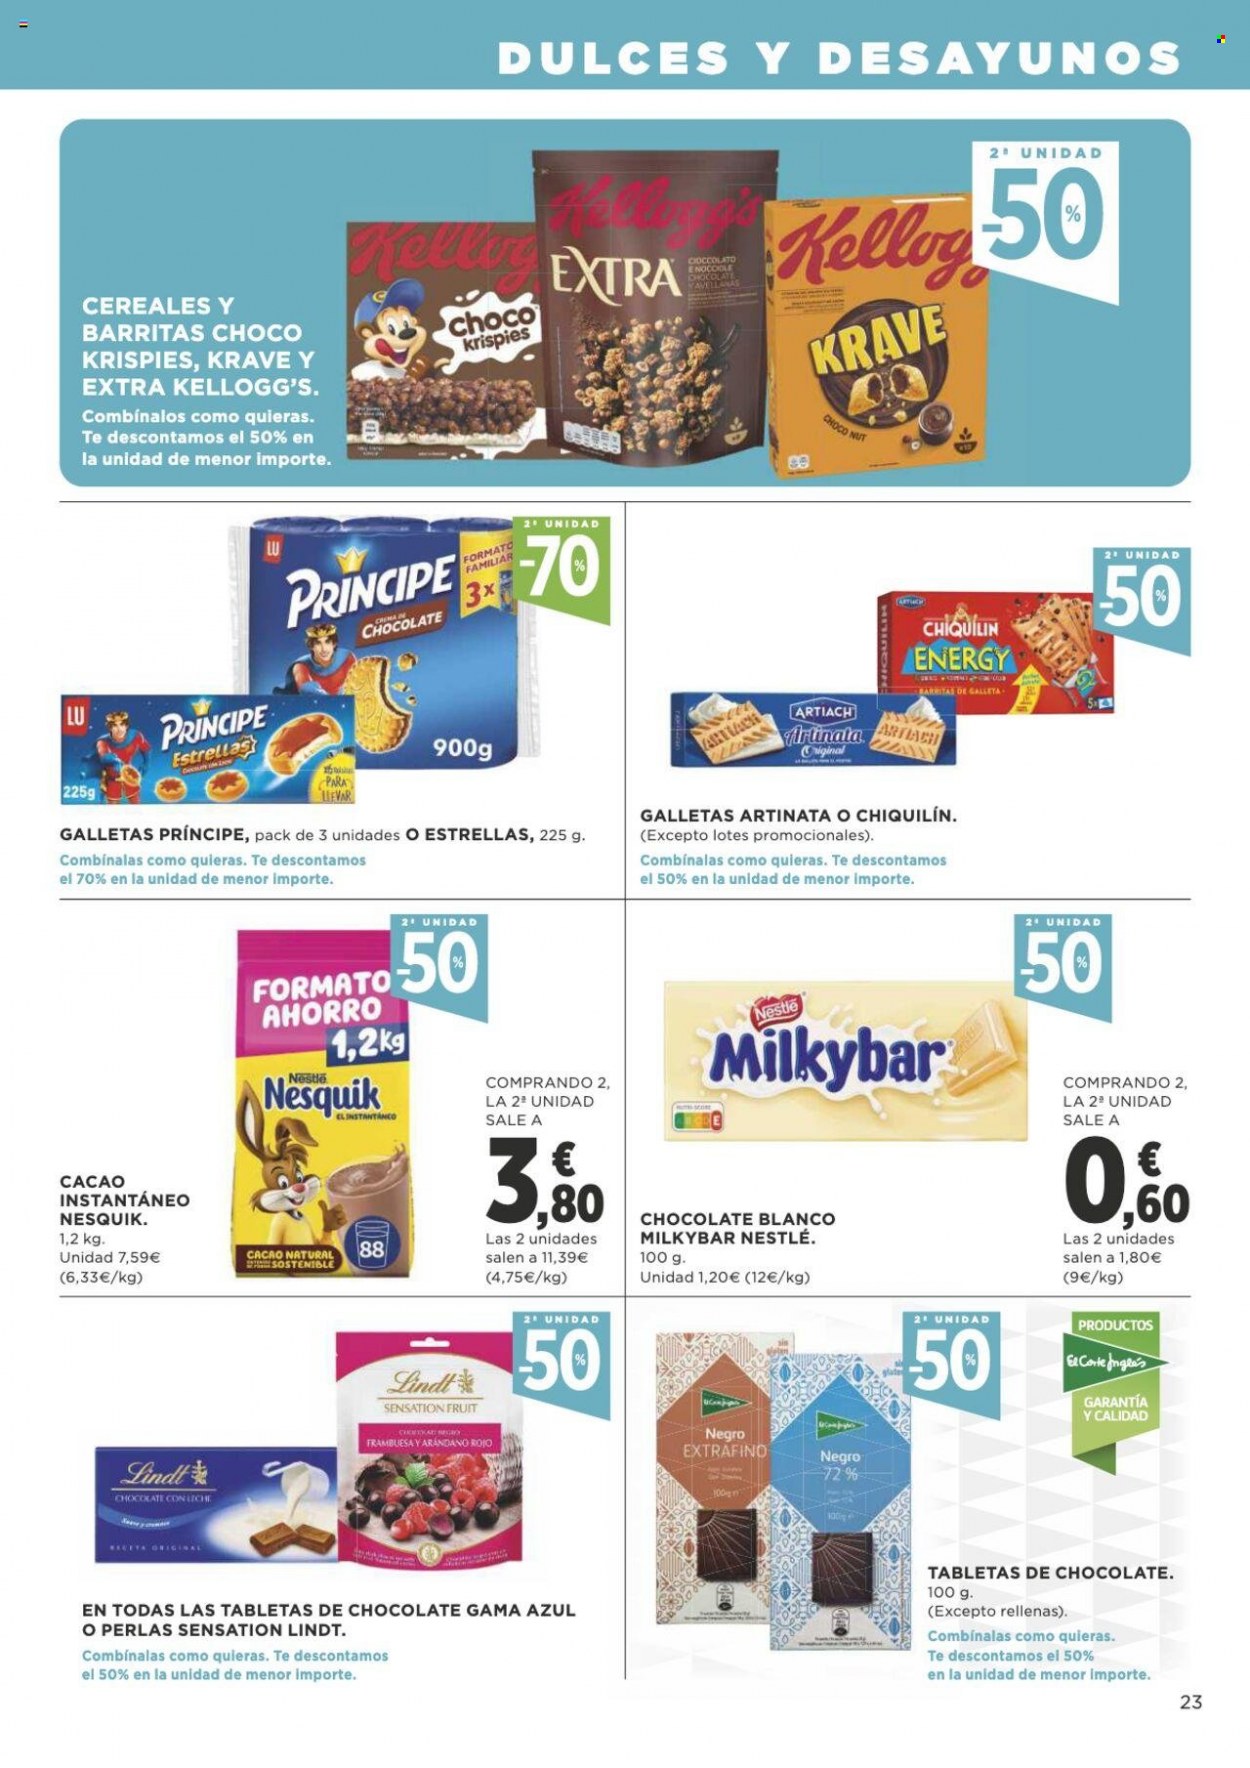 thumbnail - Folleto actual Supercor supermercados - 19/05/22 - 01/06/22 - Ventas - galletas, Nestlé, Lindt, Nesquik, Choco Krispies, Kellogg's. Página 23.